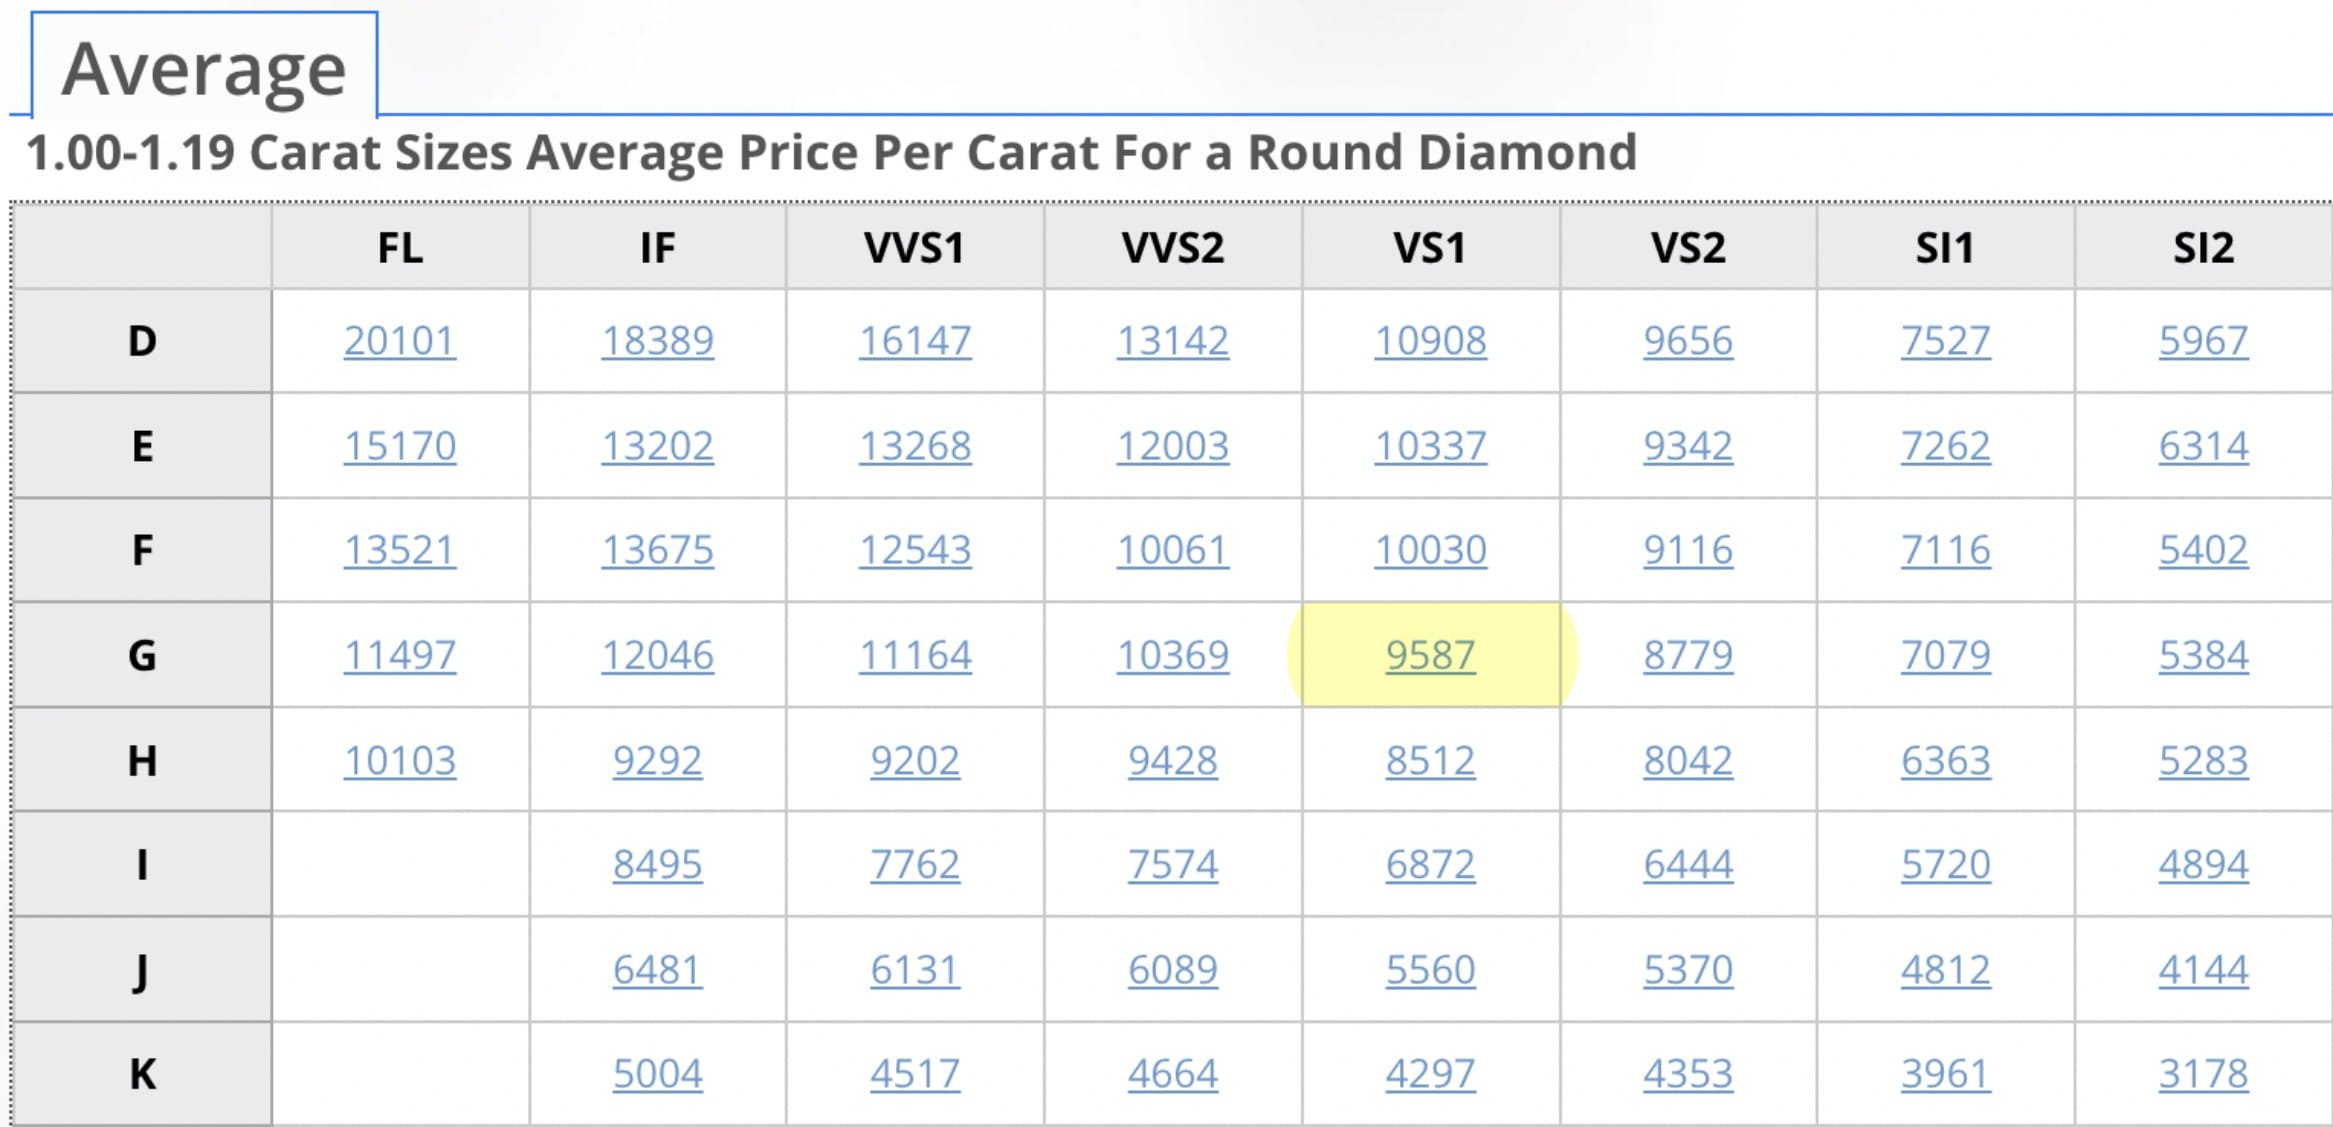 Carat Sizes Average Price Per Carat For a Round Diamond - July 2022